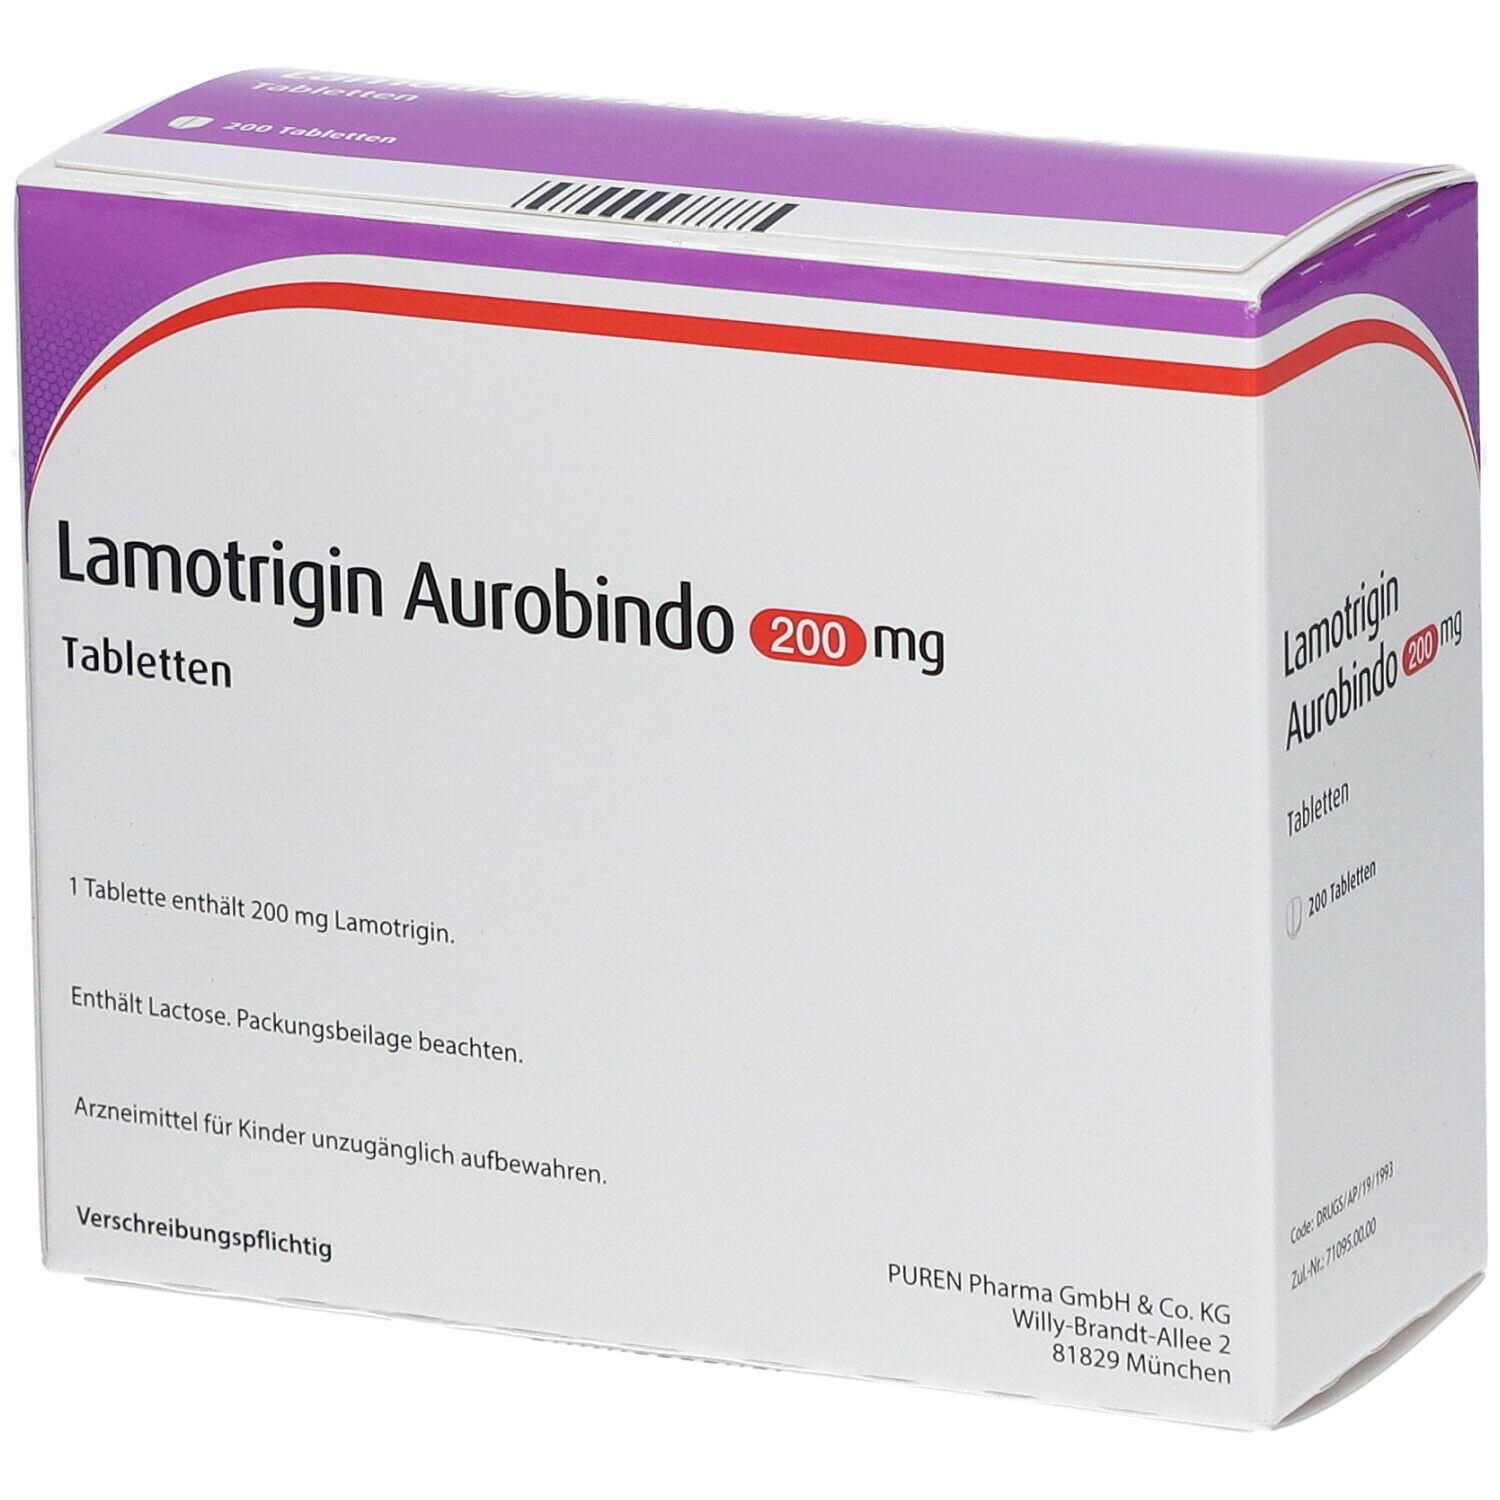 Lamotrigin Aurobindo 200 mg